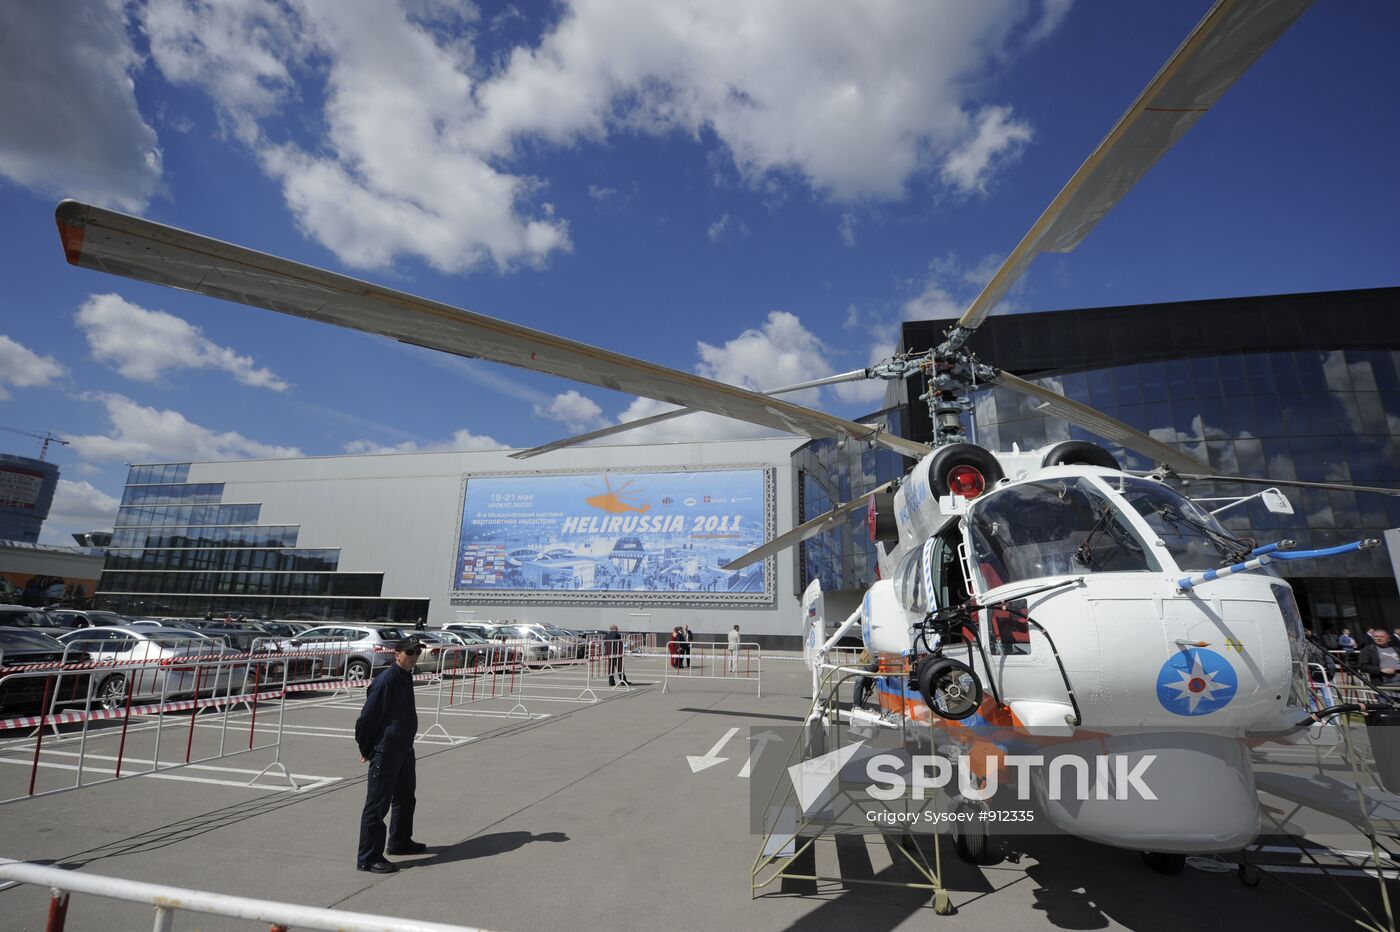 HeliRussia 2011 International Helicopter Industry Exhibiton